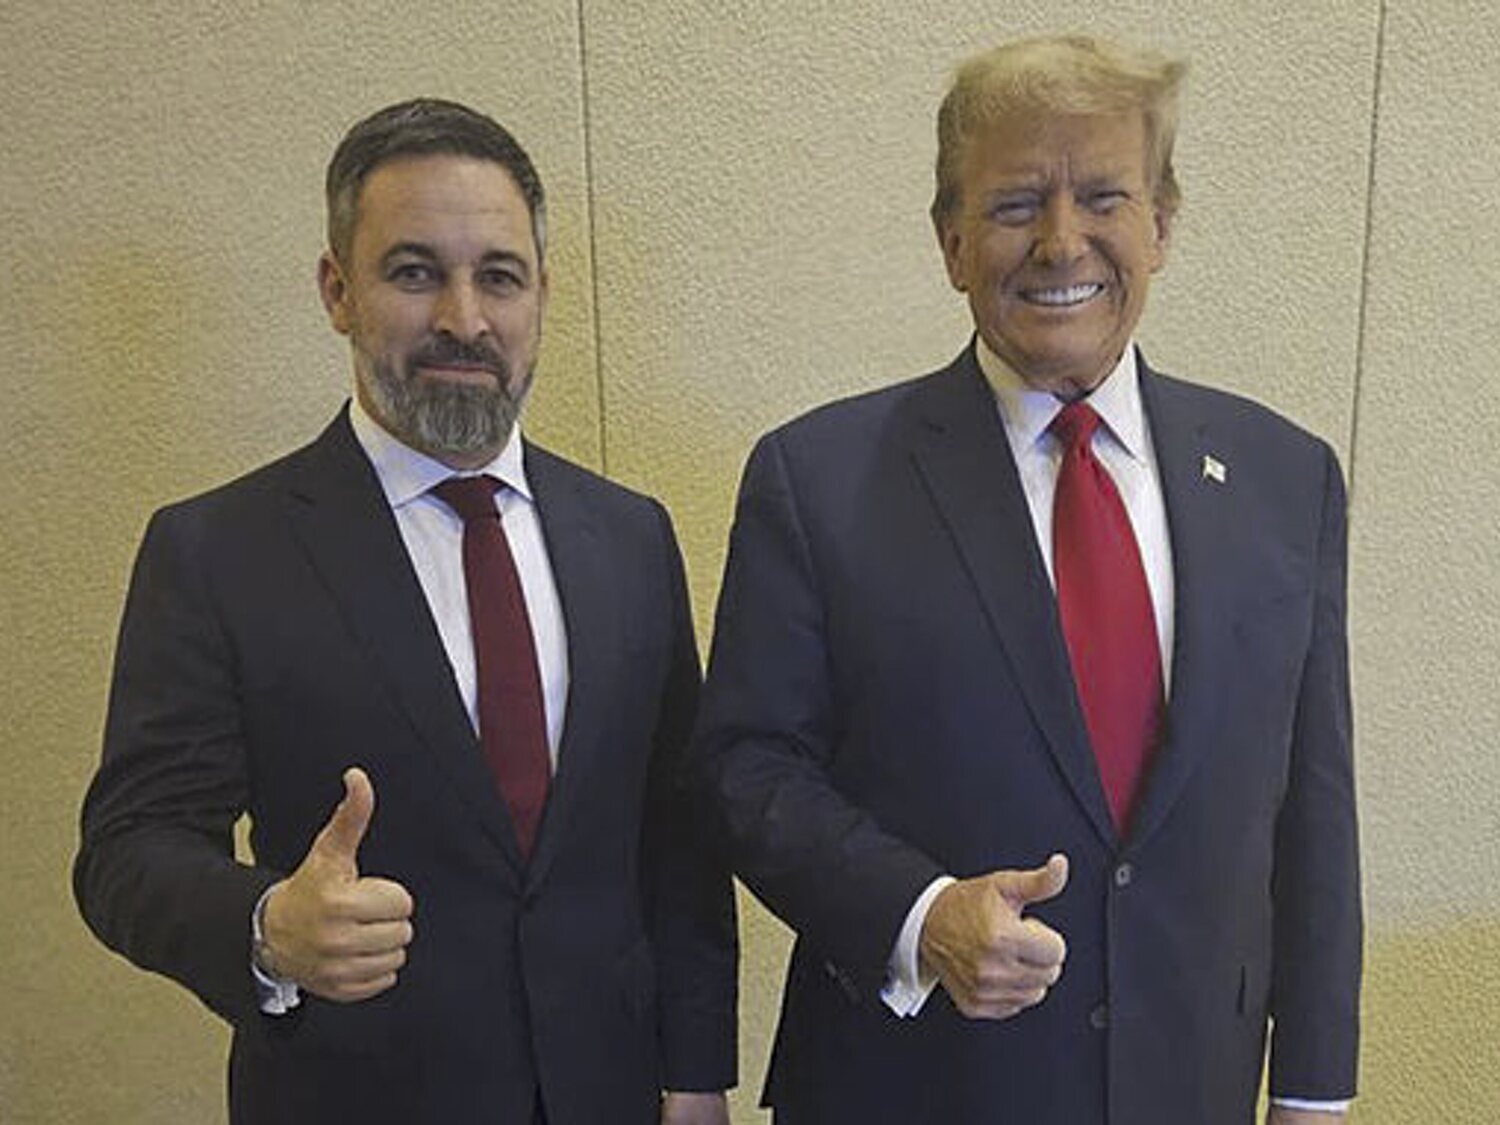 Donald Trump recibe a Santiago Abascal: "Serás el número uno"